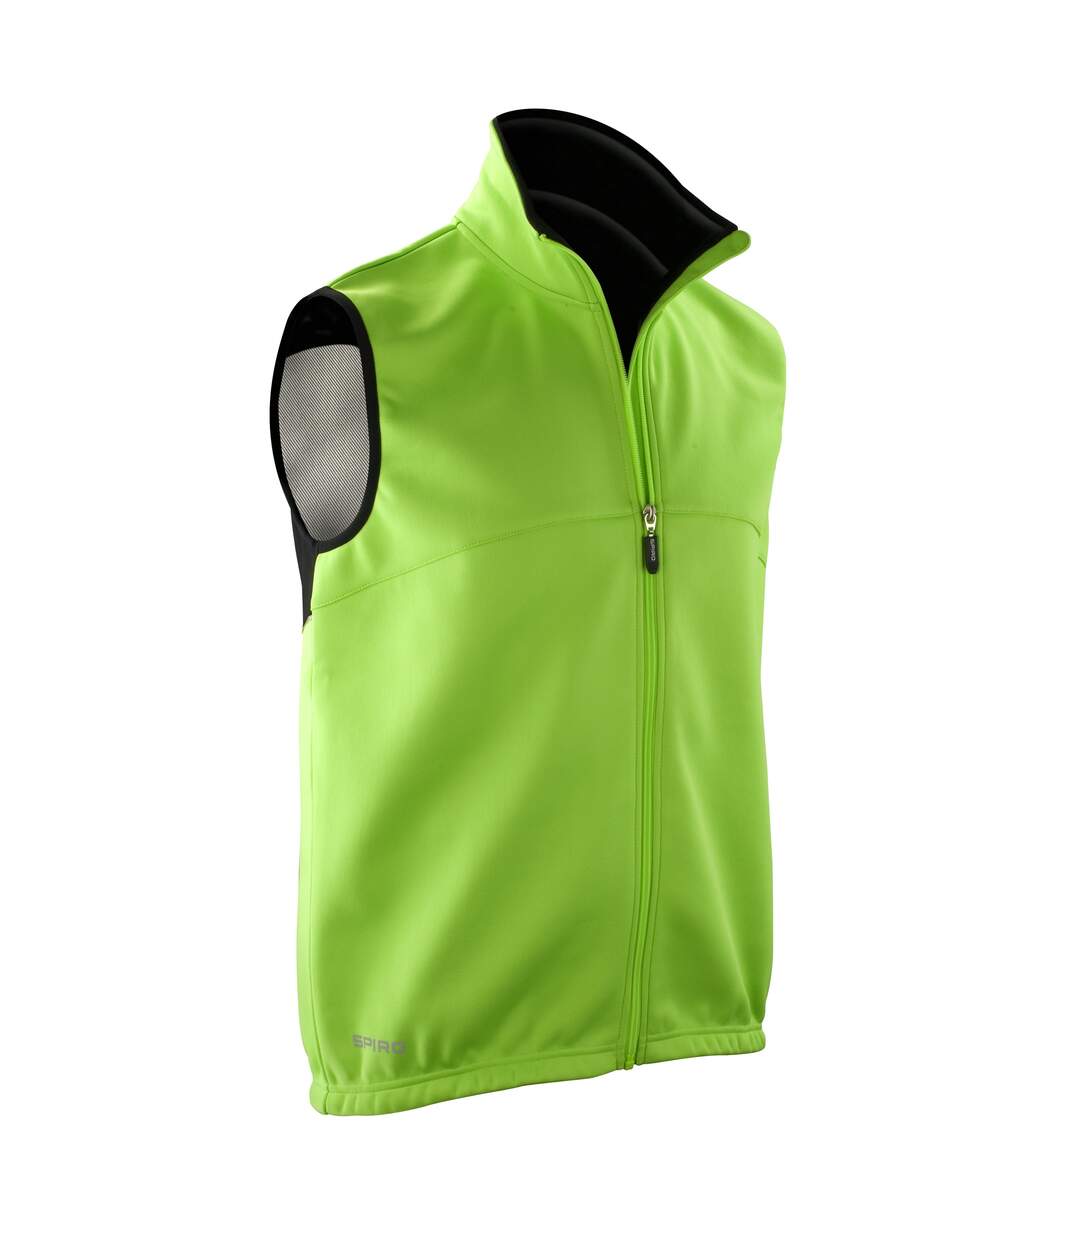 Spiro Mens Airflow Sports Training Gilet / Bodywarmer (Neon Green/ Black)